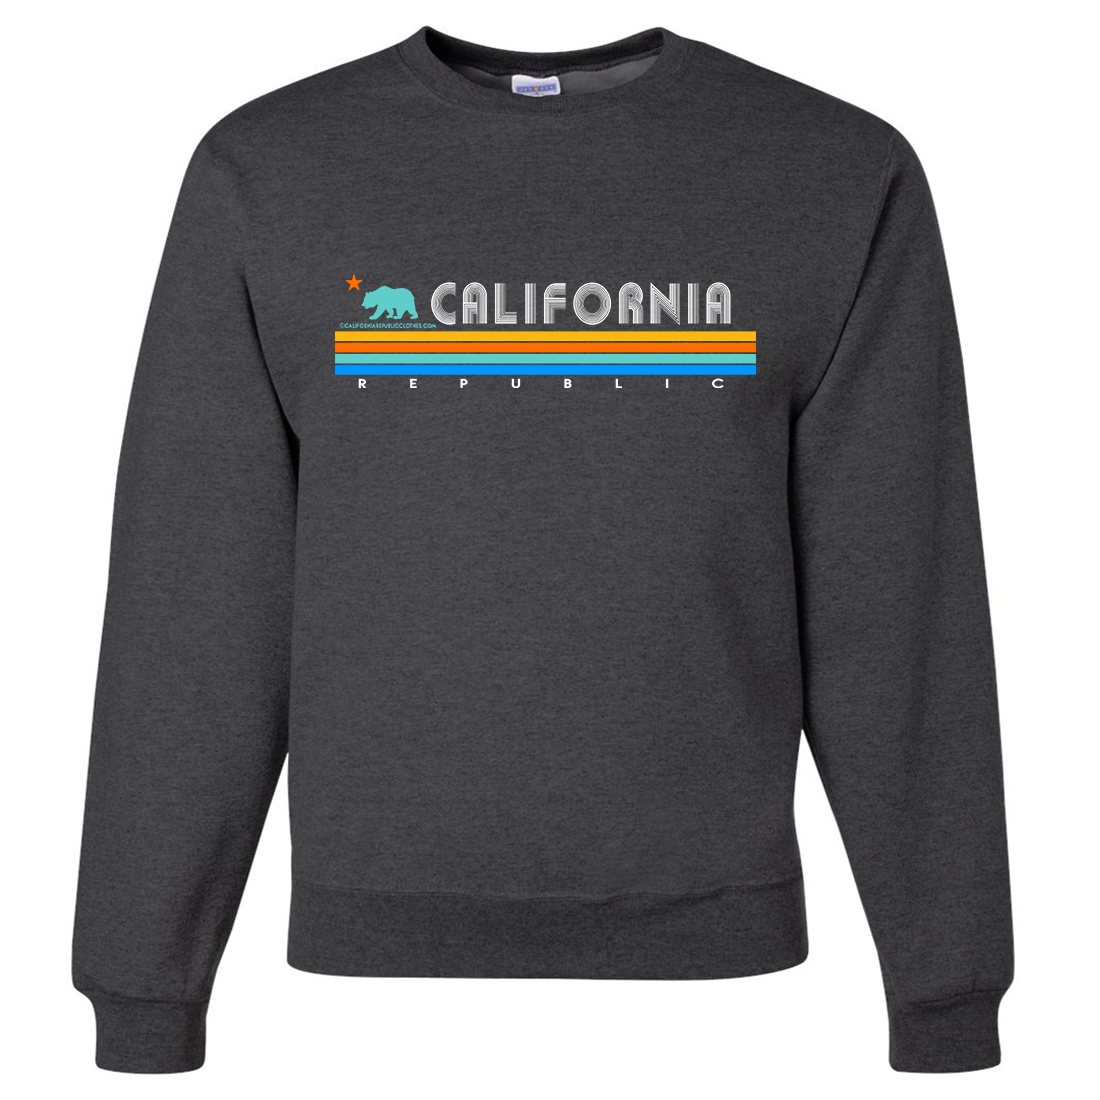 UCLA Big Cotton Crewneck Sweatshirt - Black  Black sweatshirts, Crew neck  sweatshirt, Sweatshirts